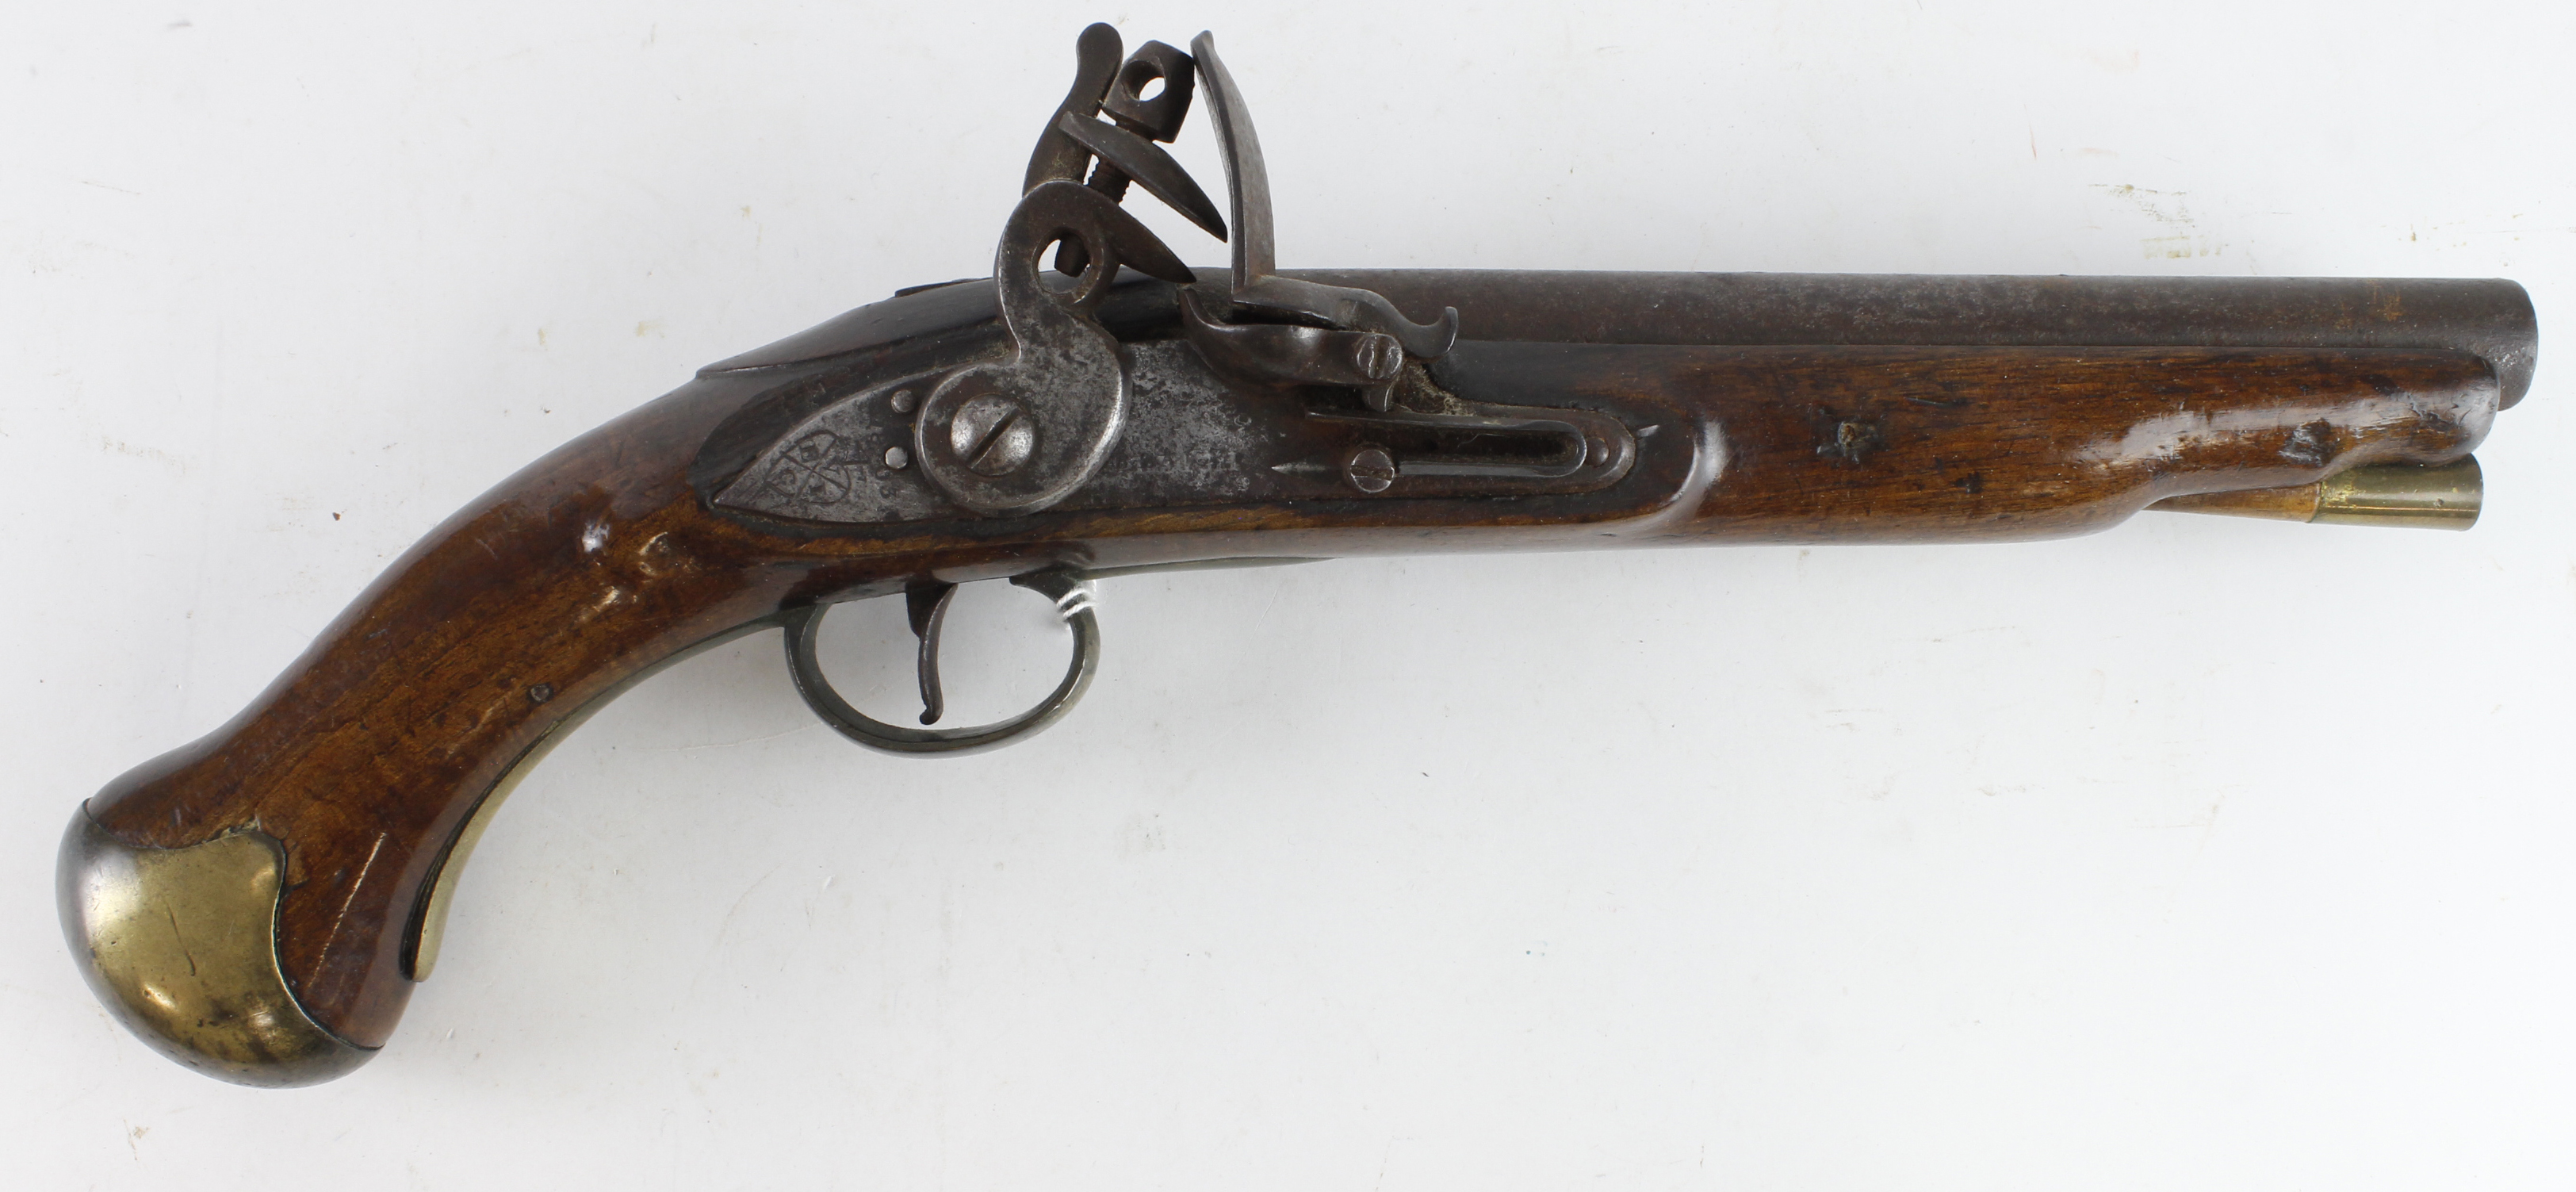 East India Company Flintlock Pistol of the Napoleonic War. Model "Short" Cavalry Pistol 1778 to 1807